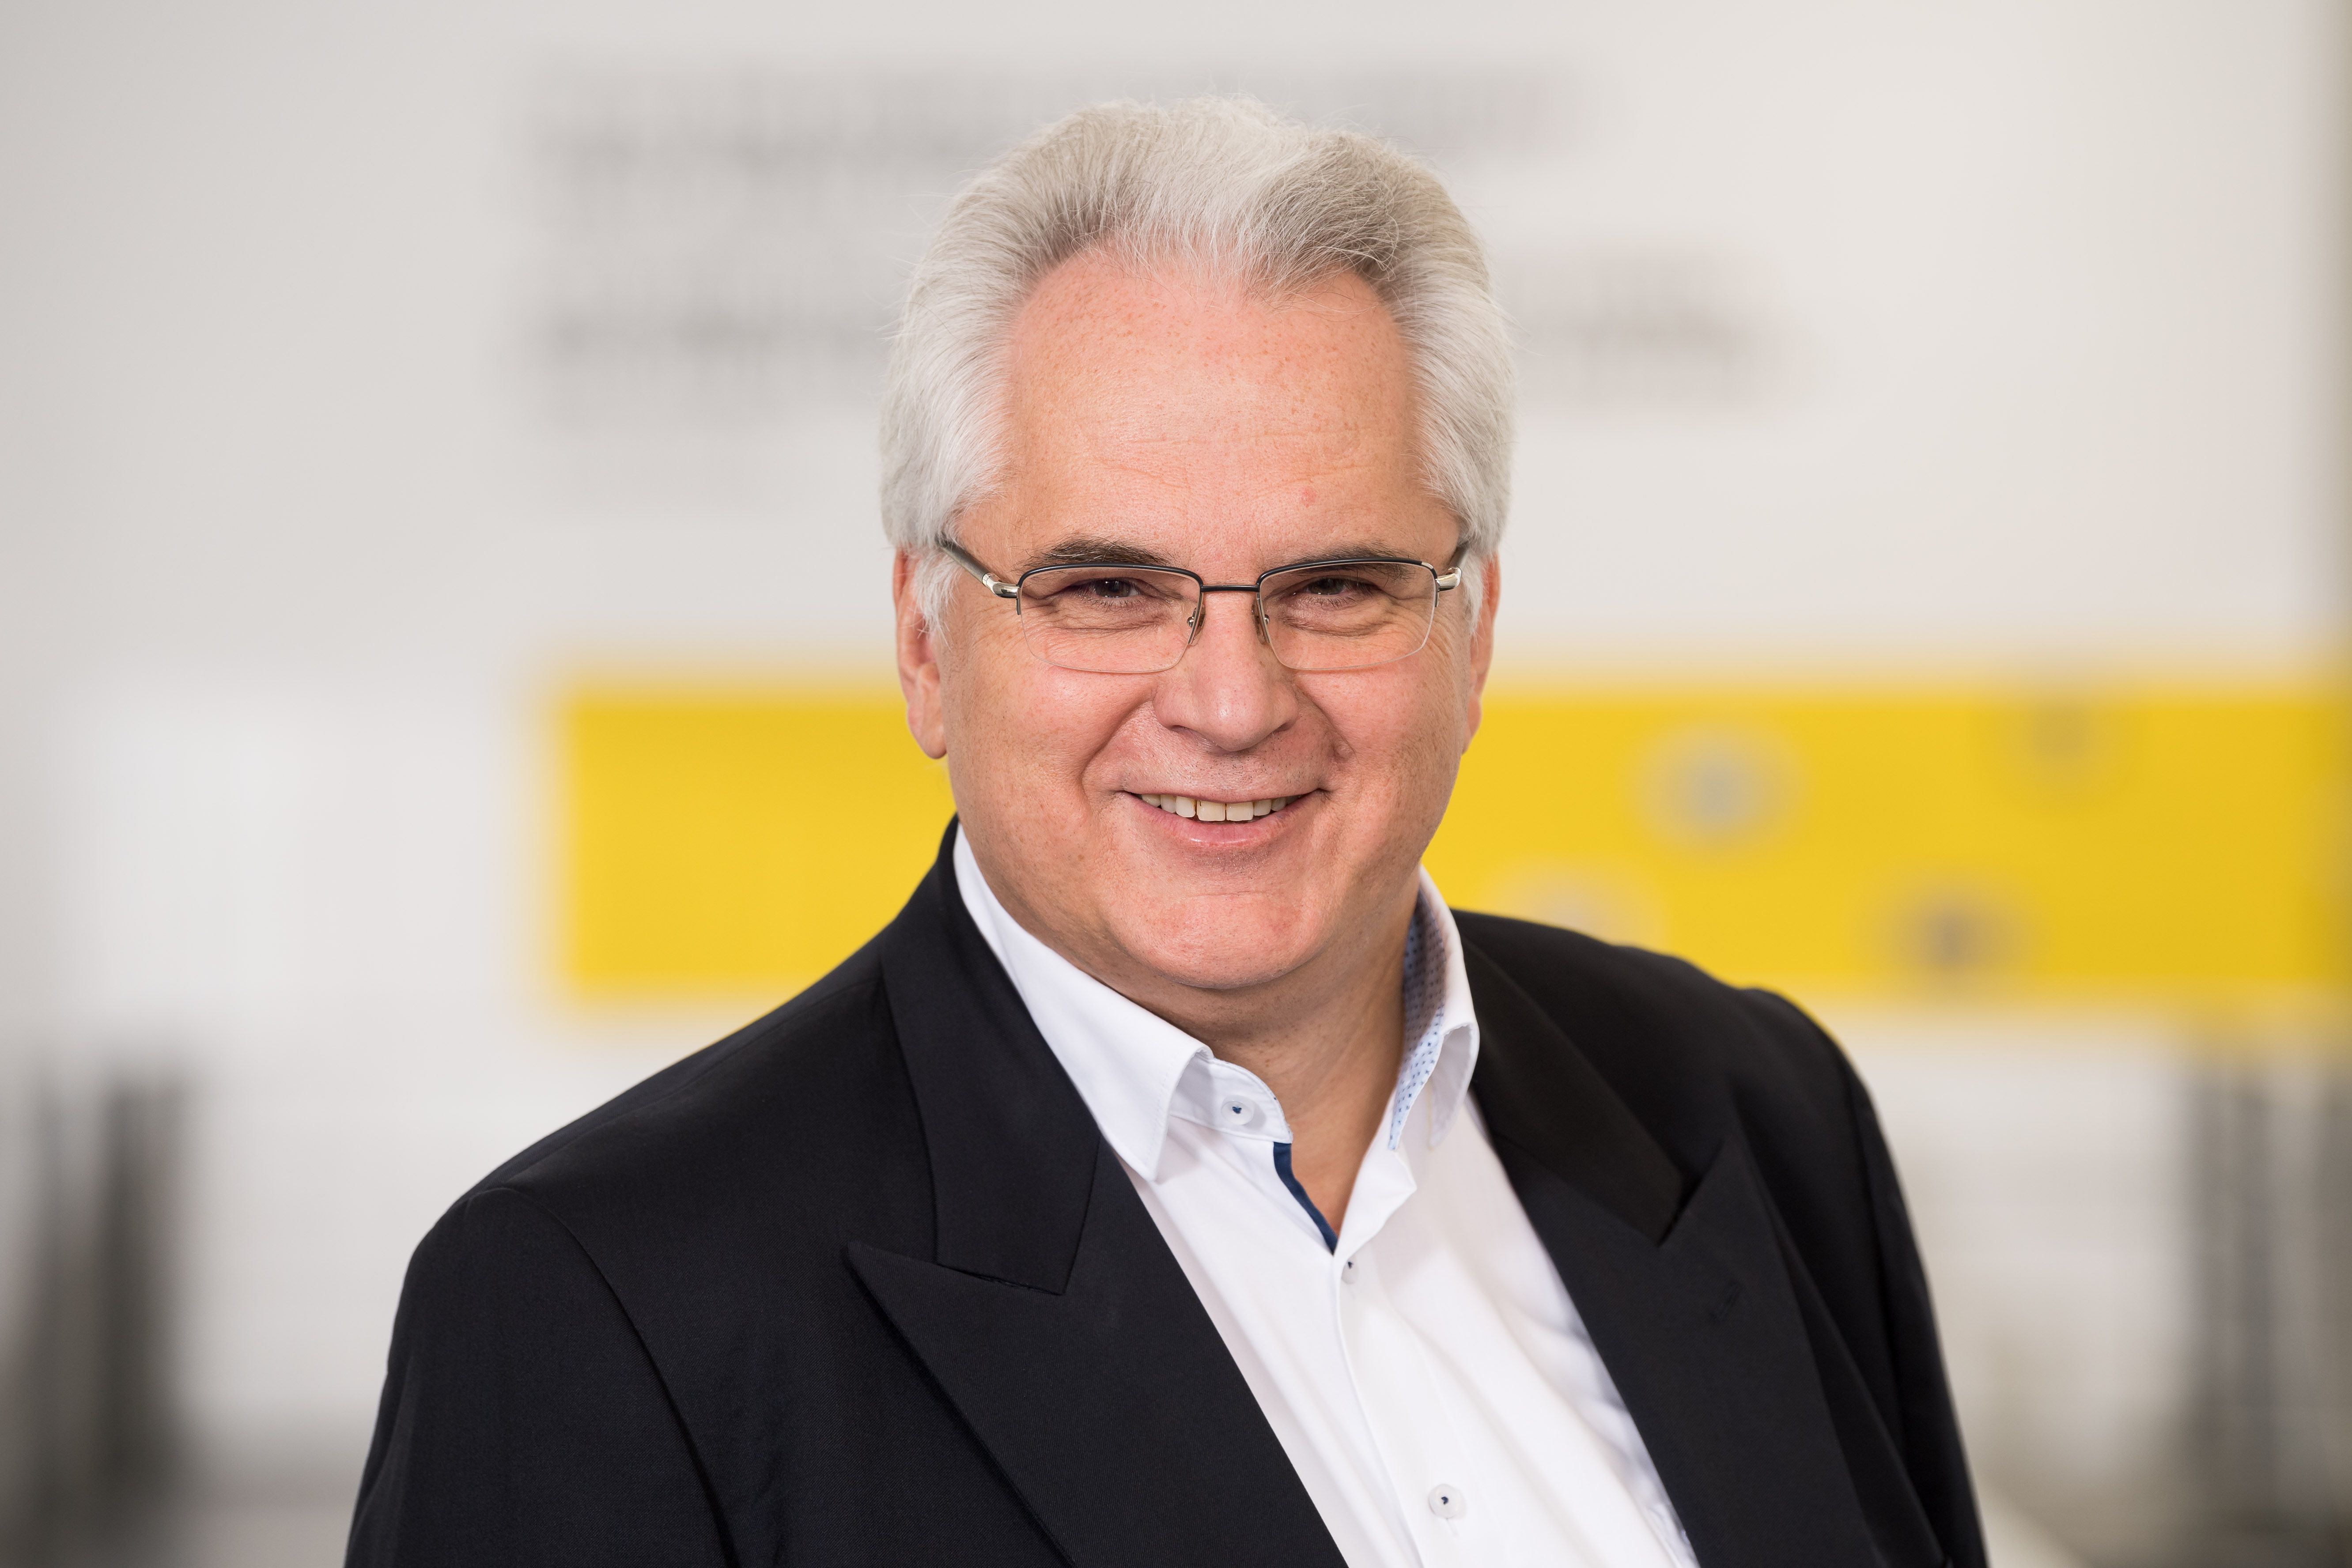 Achim Becker, Managing Director of the newly established Kärcher Financial Solutions GmbH (KFS)